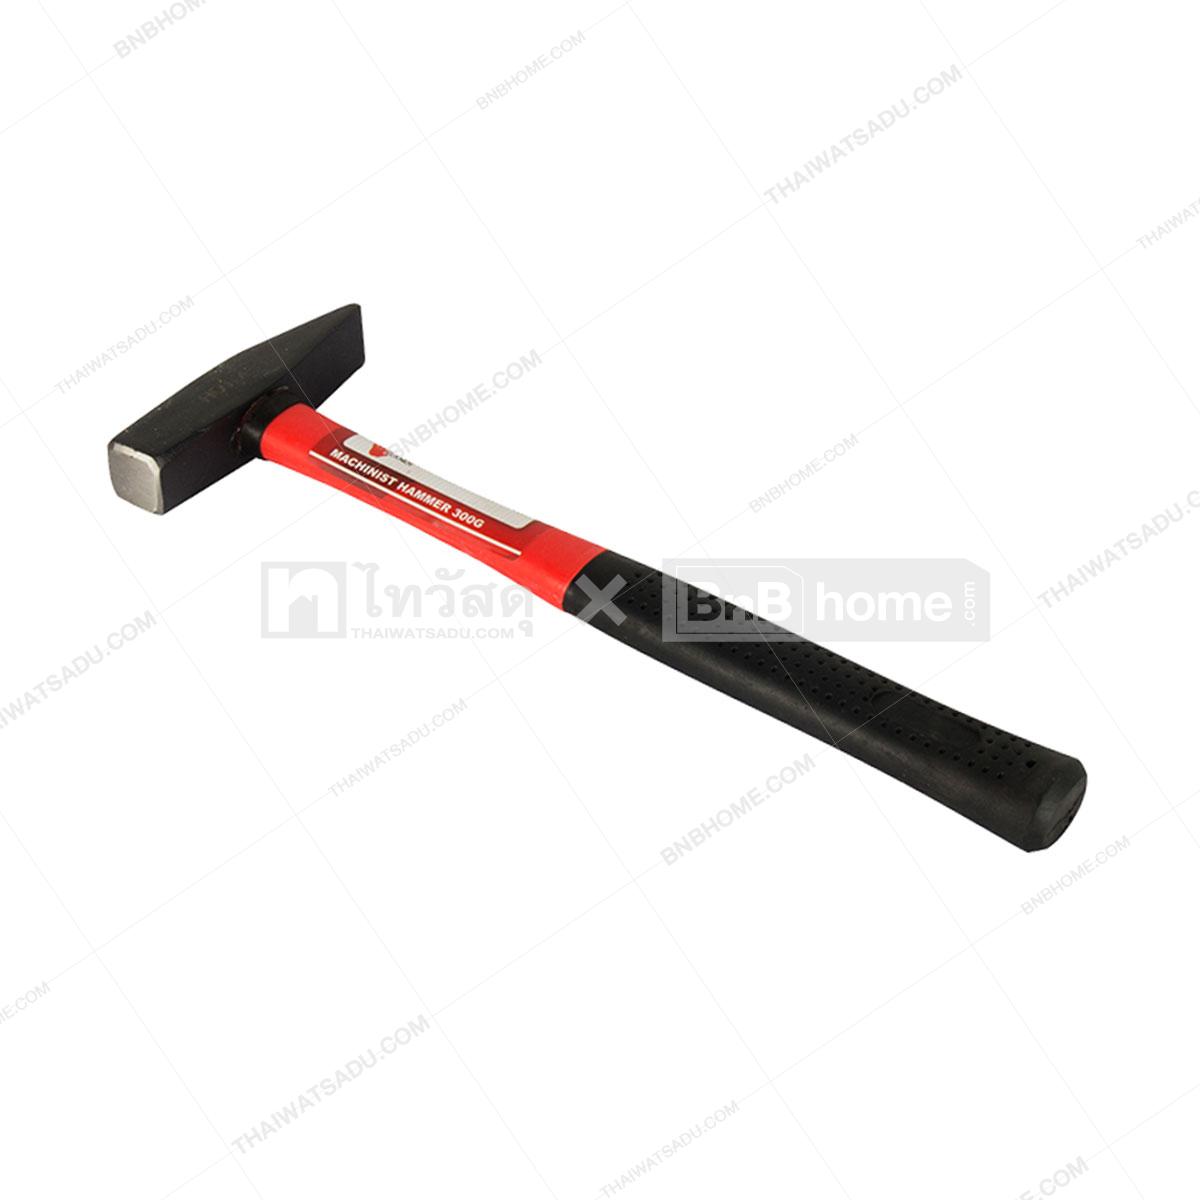 Machinist Hammers 300 G.HANDI No. 1736 Size 2.5 x 10.5 x 30 CM. Red - Black  - THAI WATSADU